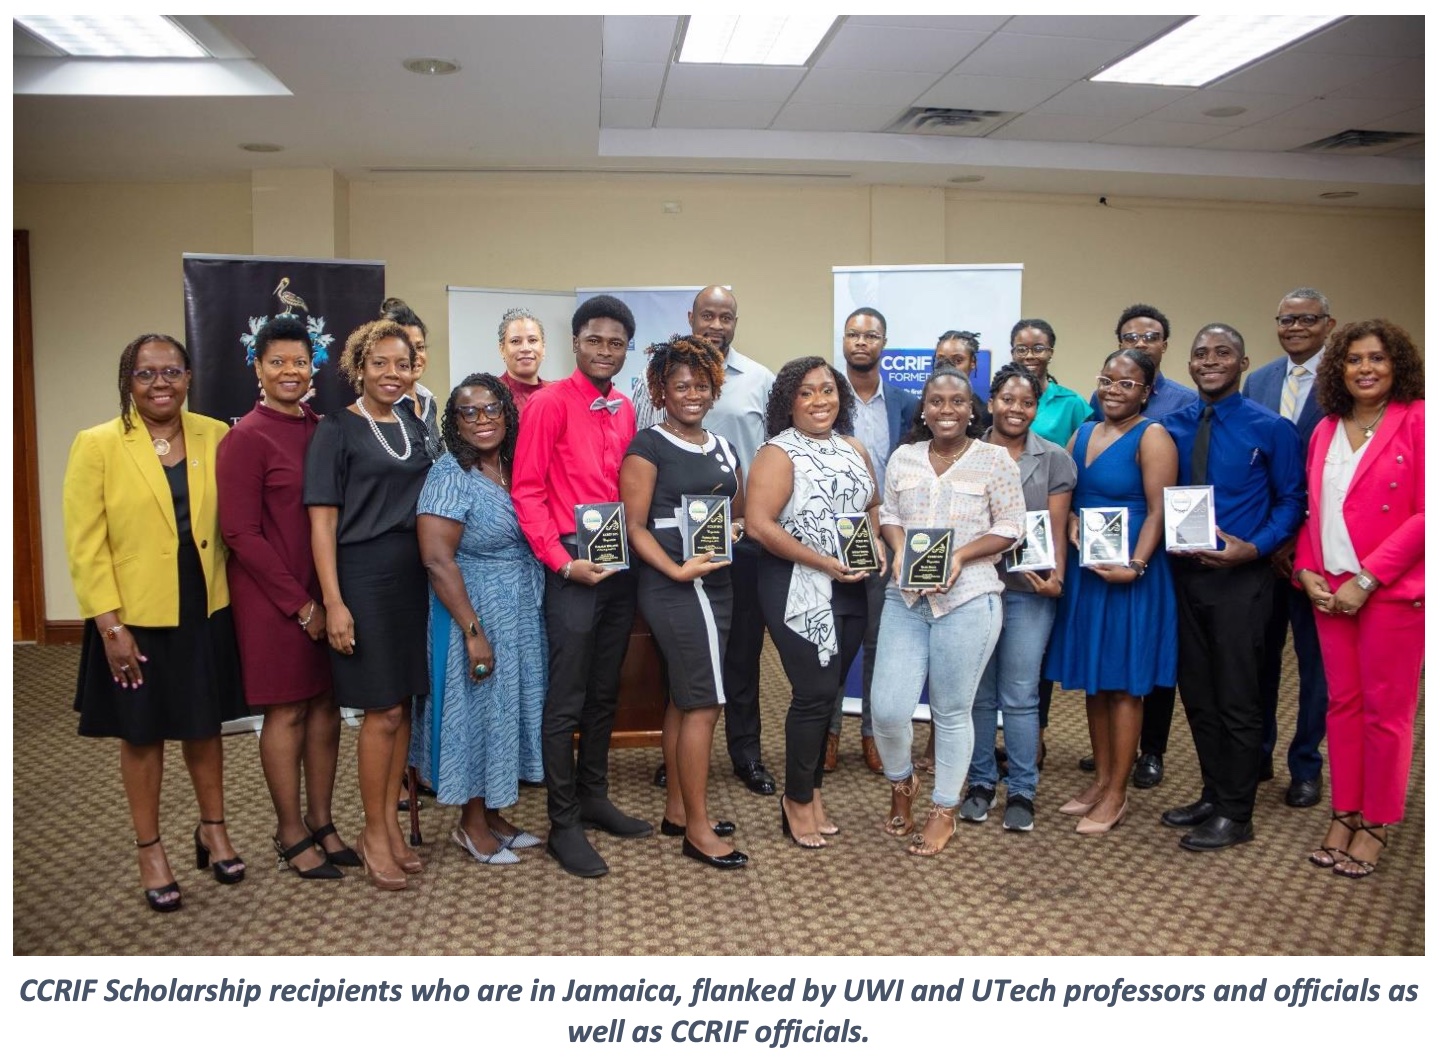 CCRIF Scholarship recipients present in Jamaica